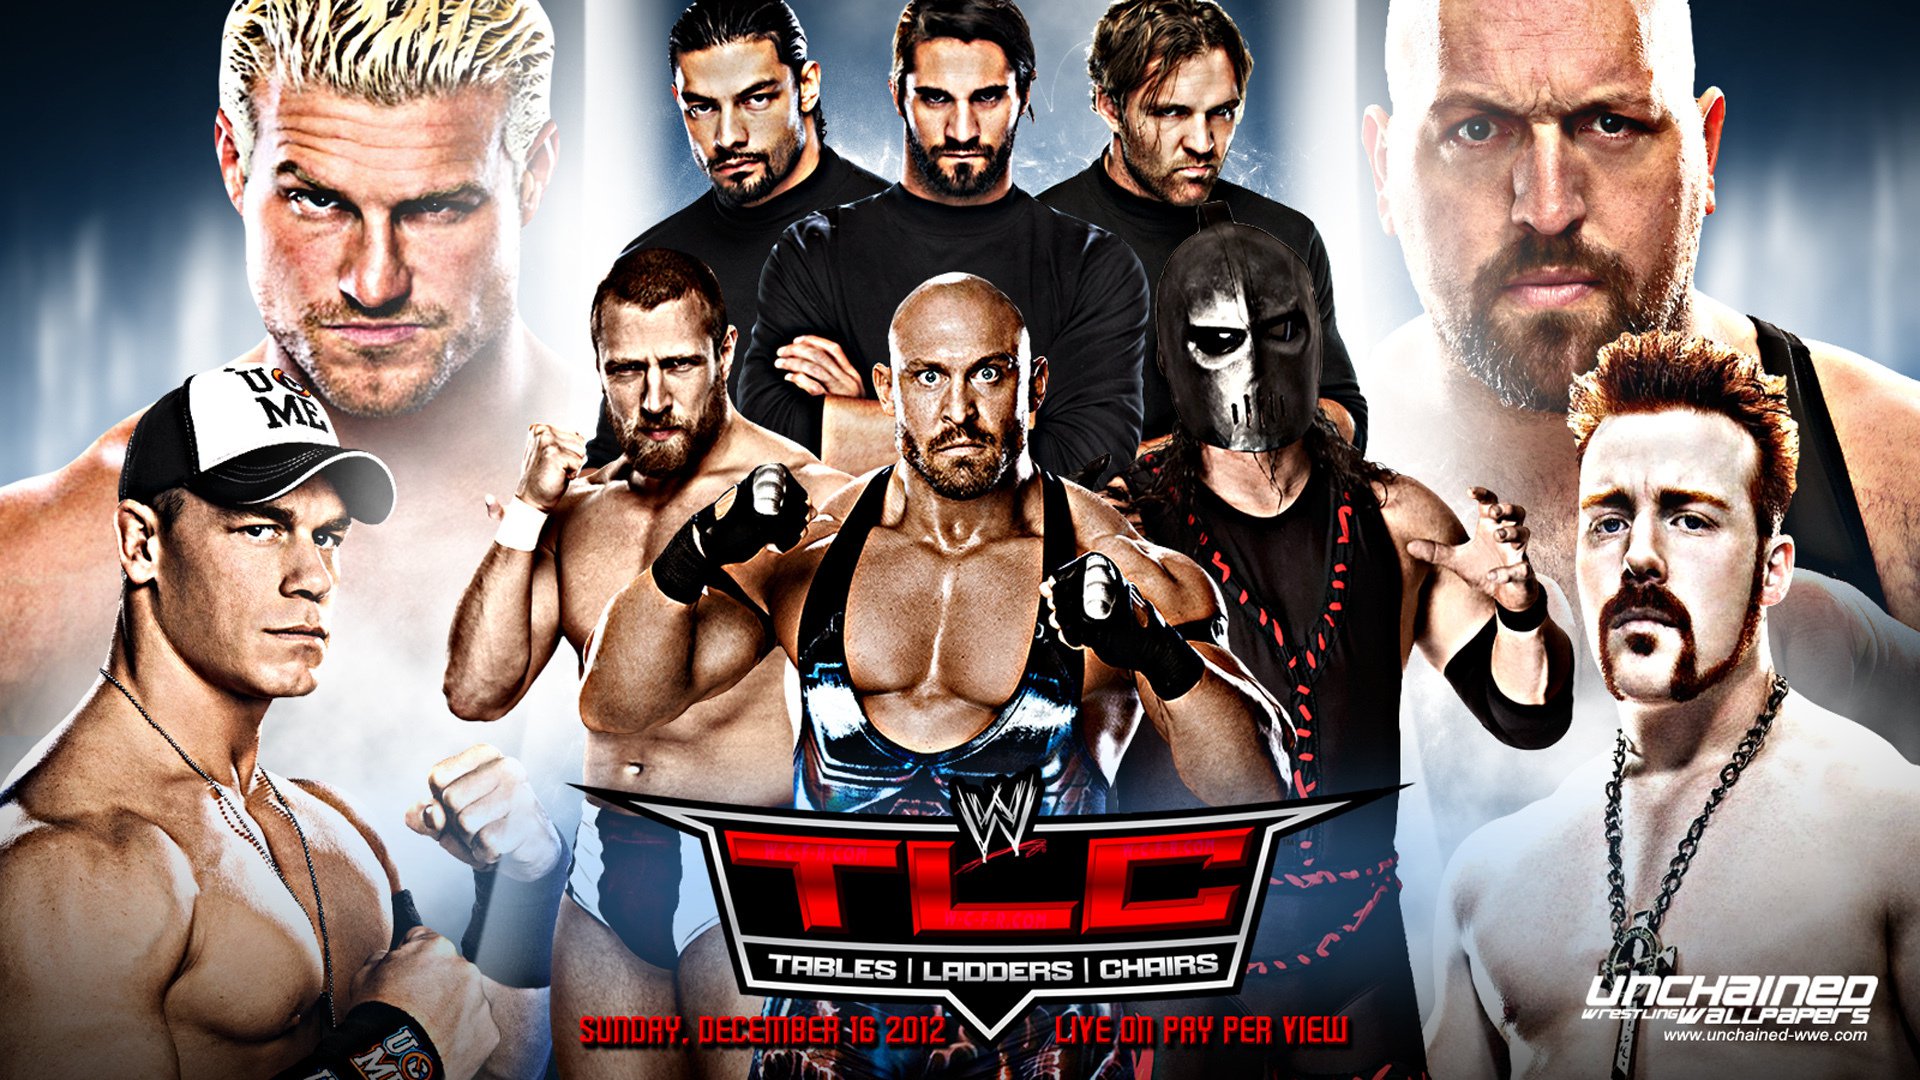 WWE TLC: Tables Ladders & Chairs 2012 HD wallpapers, Desktop wallpaper - most viewed